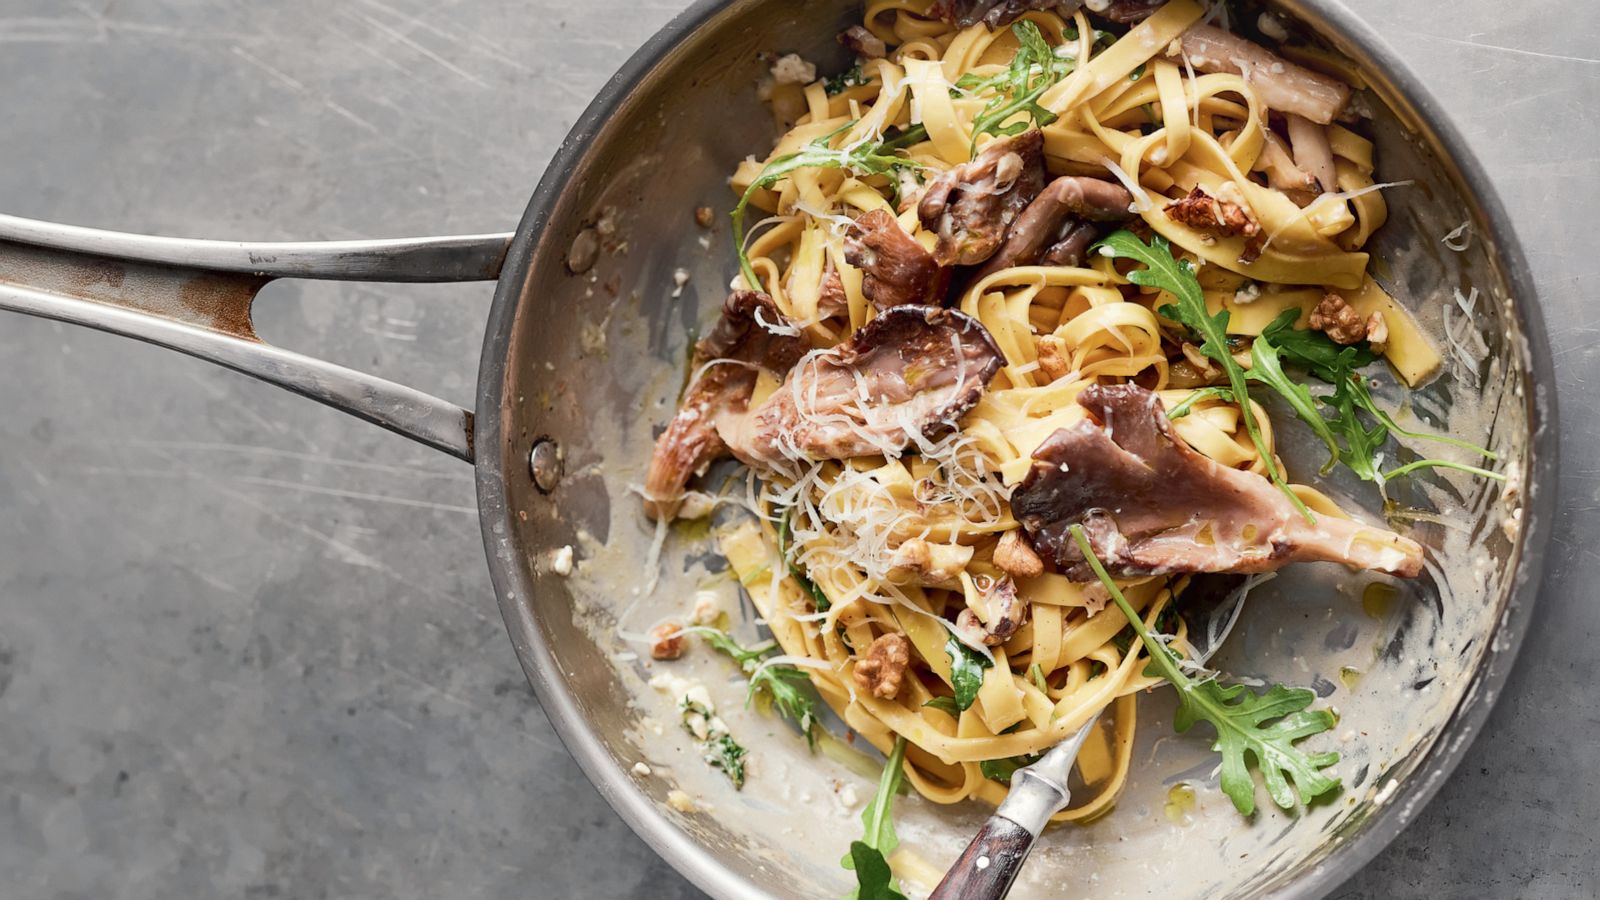 Easy 1-pot garlic mushroom tagliatelle pasta recipe from Jamie Oliver -  Good Morning America